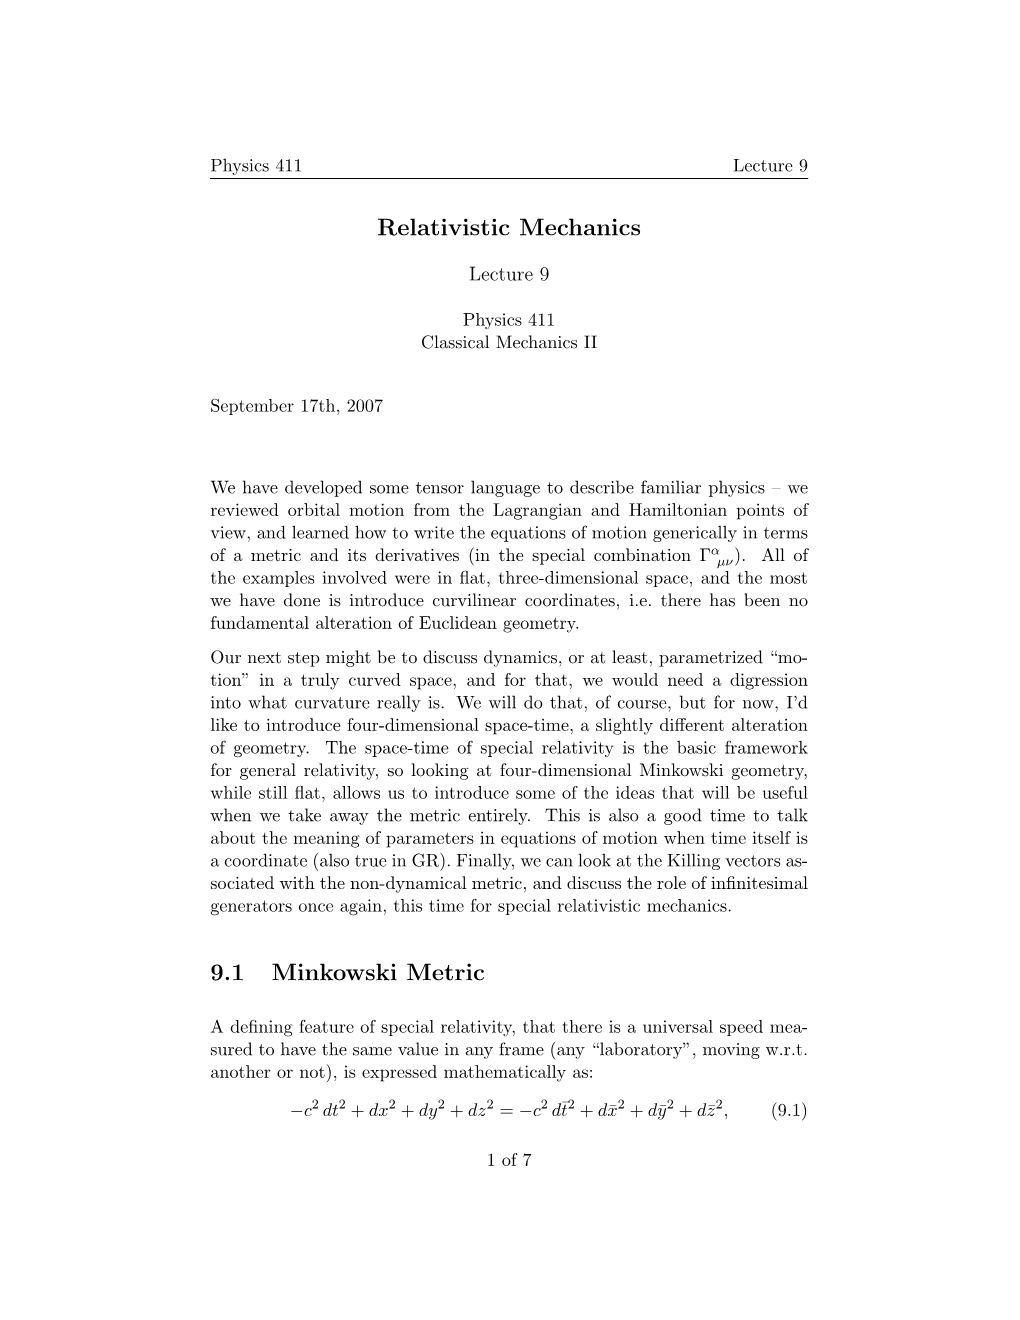 Relativistic Mechanics 9.1 Minkowski Metric